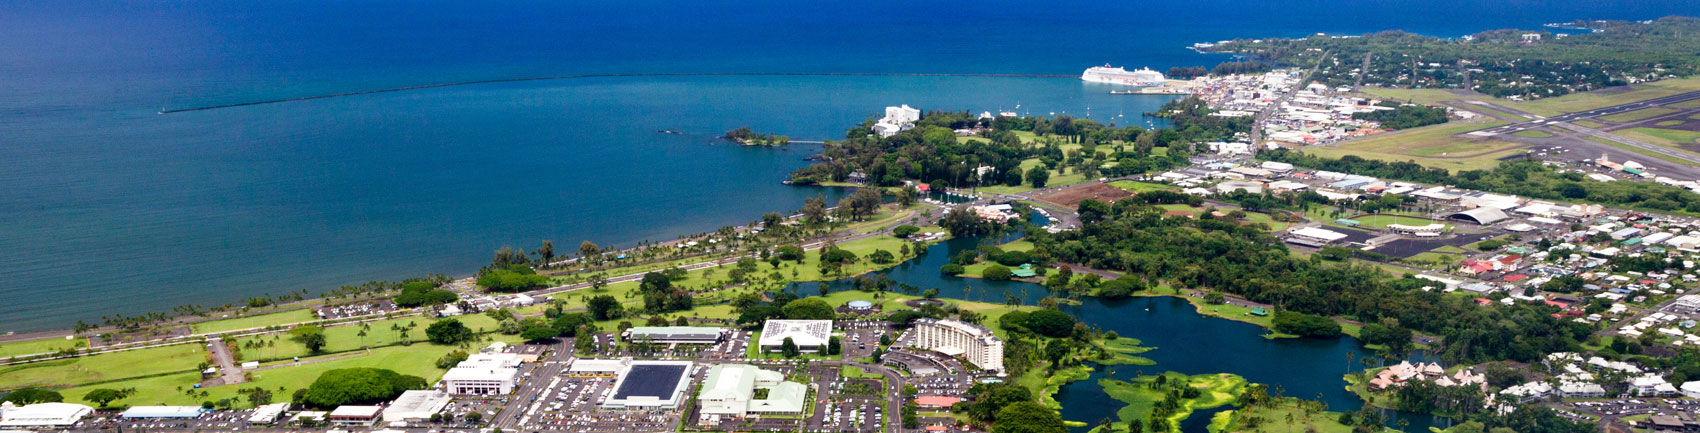 Hilo on the Island of Hawaii aerial shot